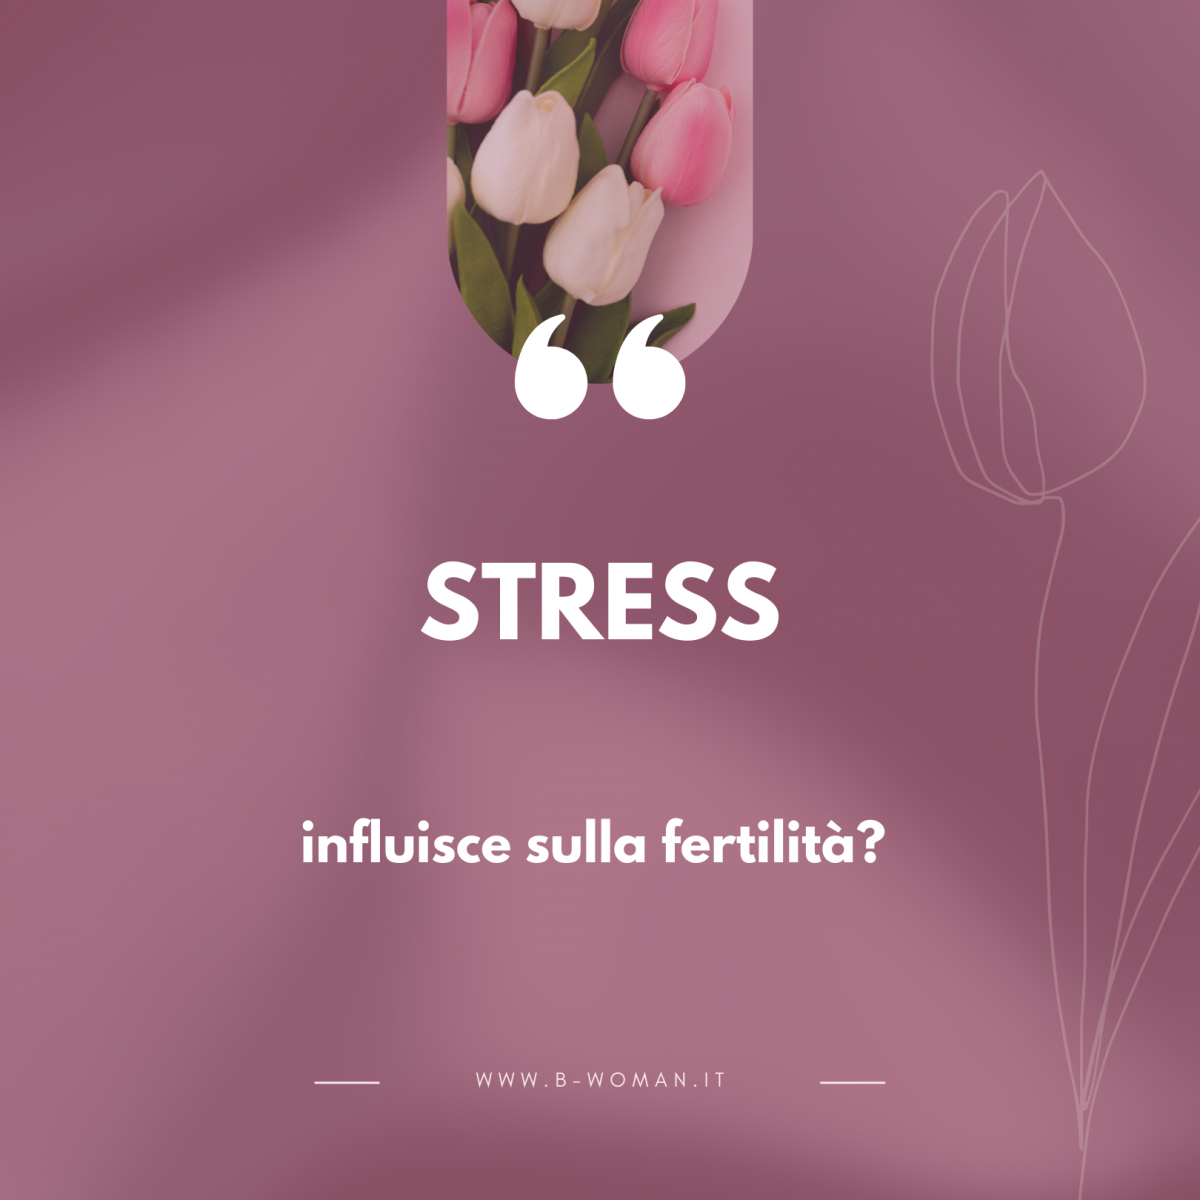 Lo-stress-influisce-sulla-fertilità-I-consigli-B-Woman--1200x1200.png